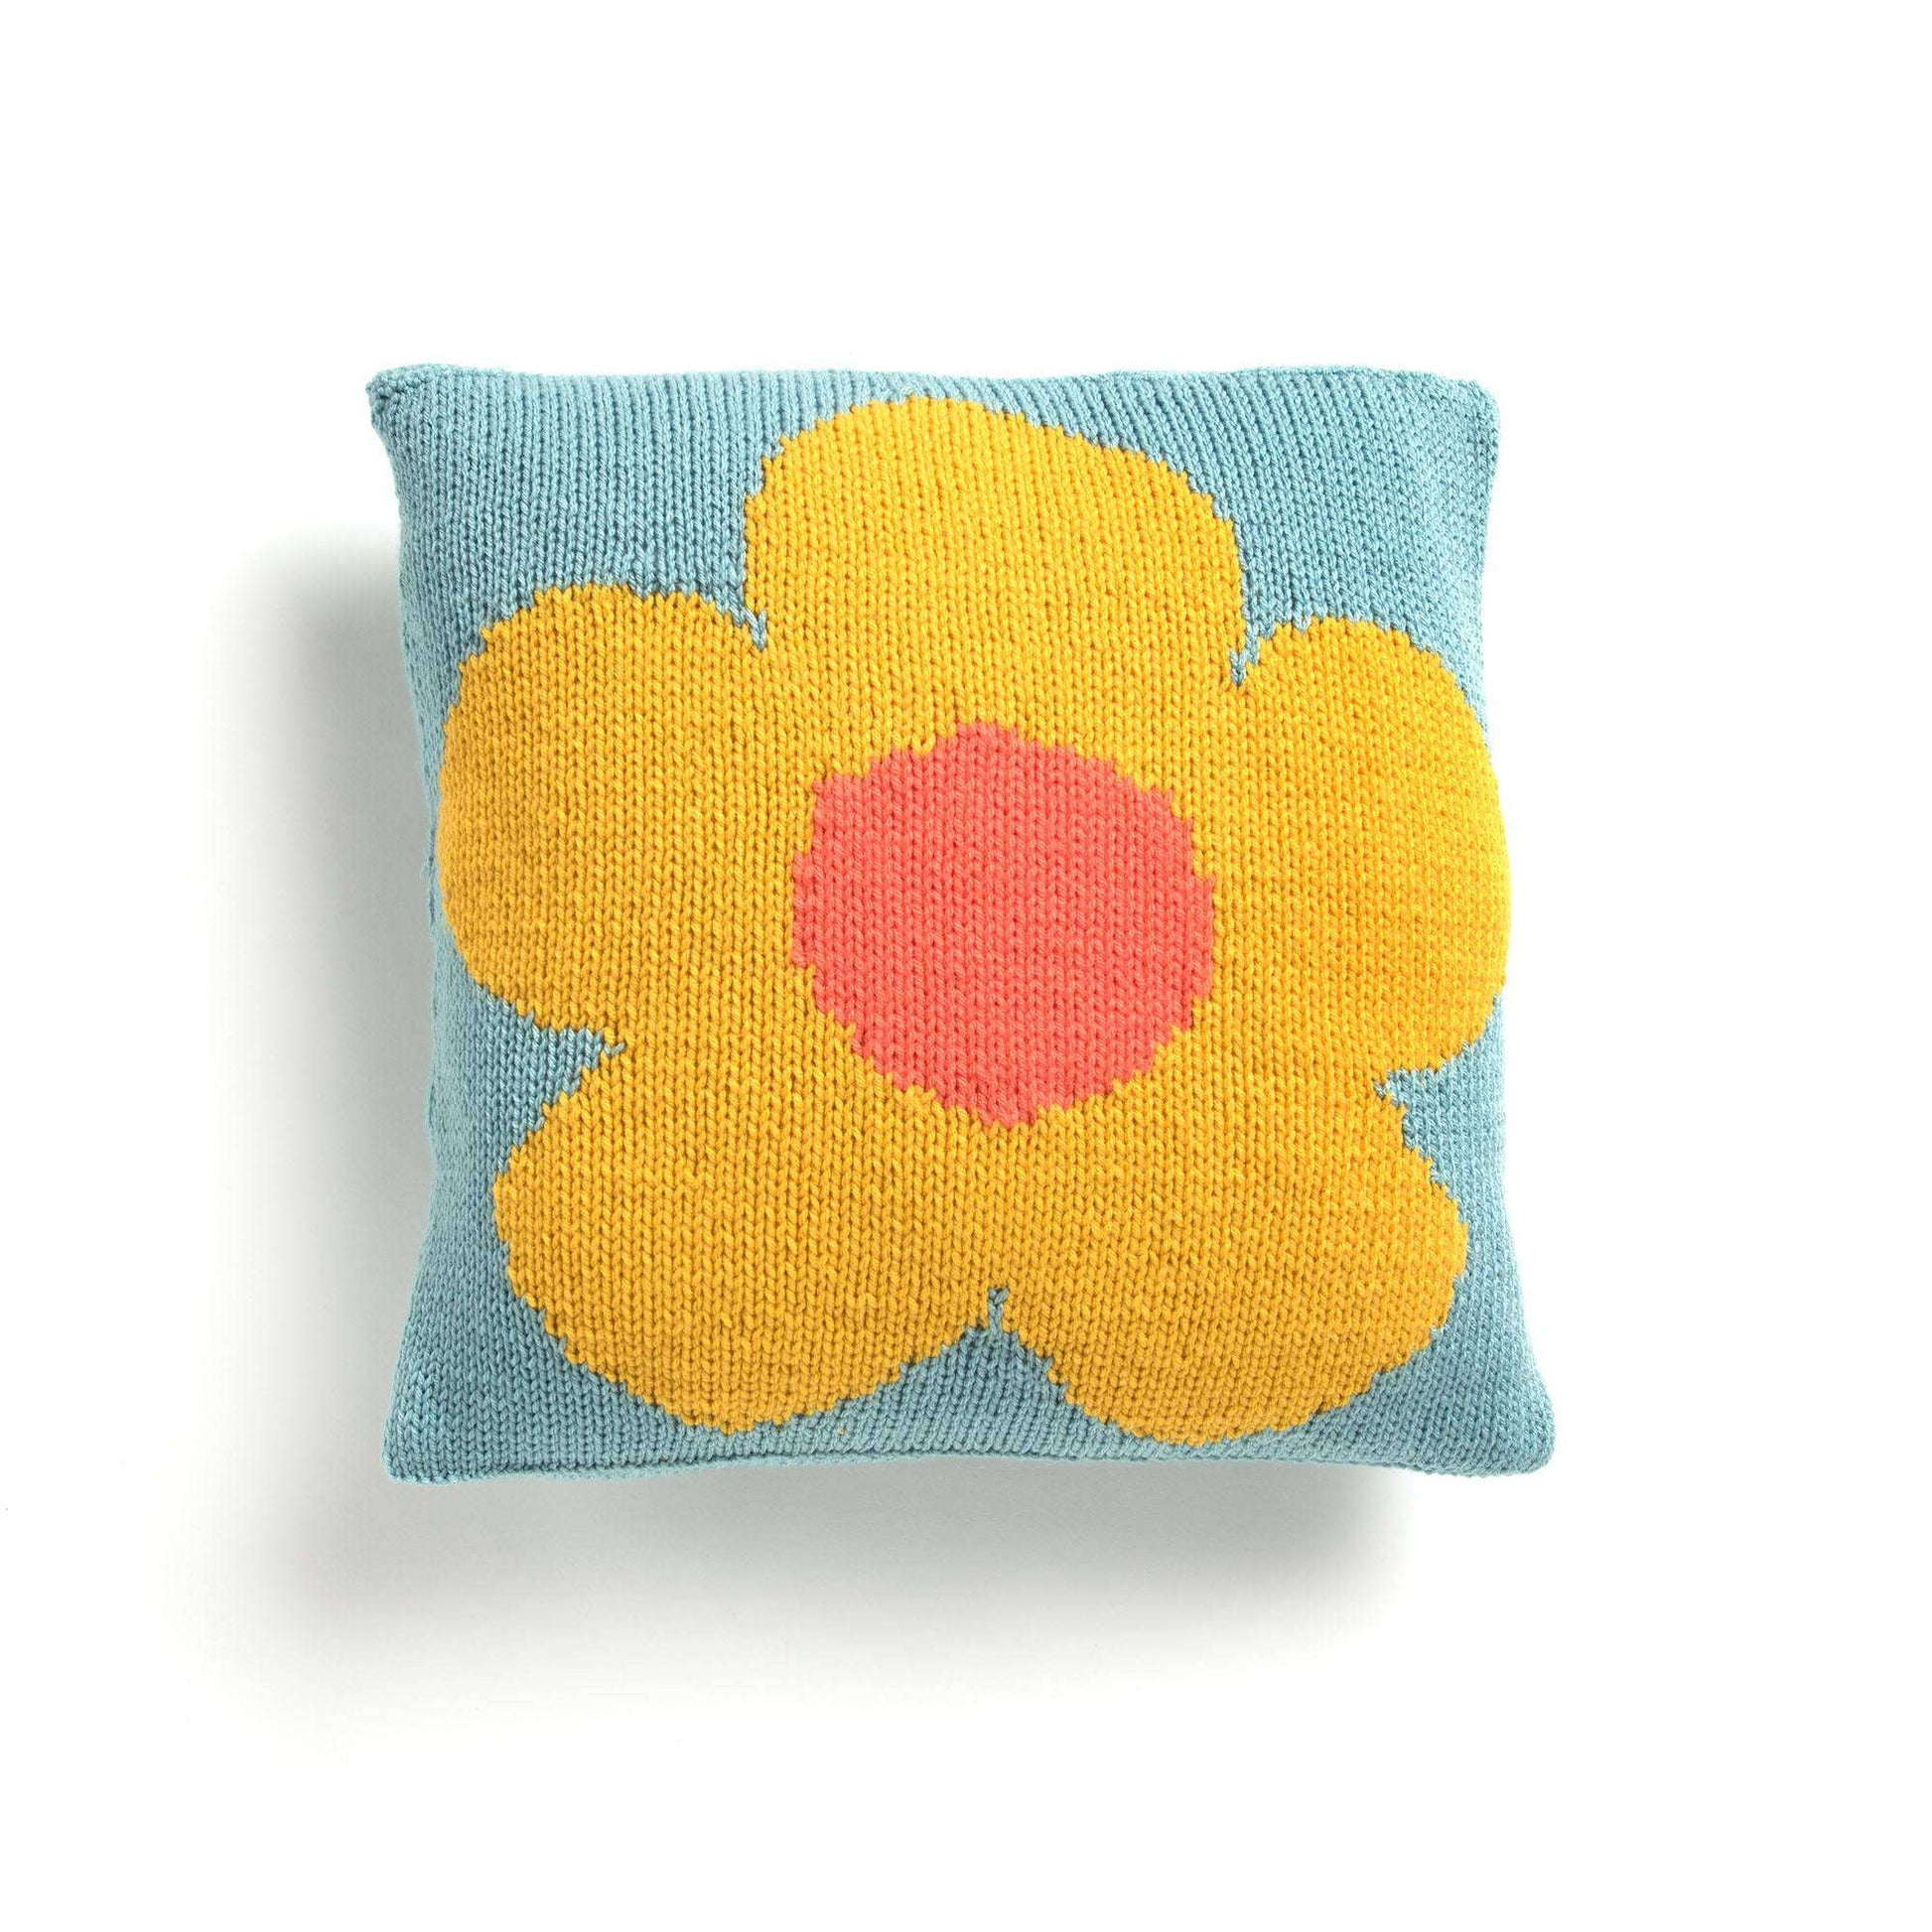 Free Caron Knit Intarsia Mod Flower Pillow Pattern